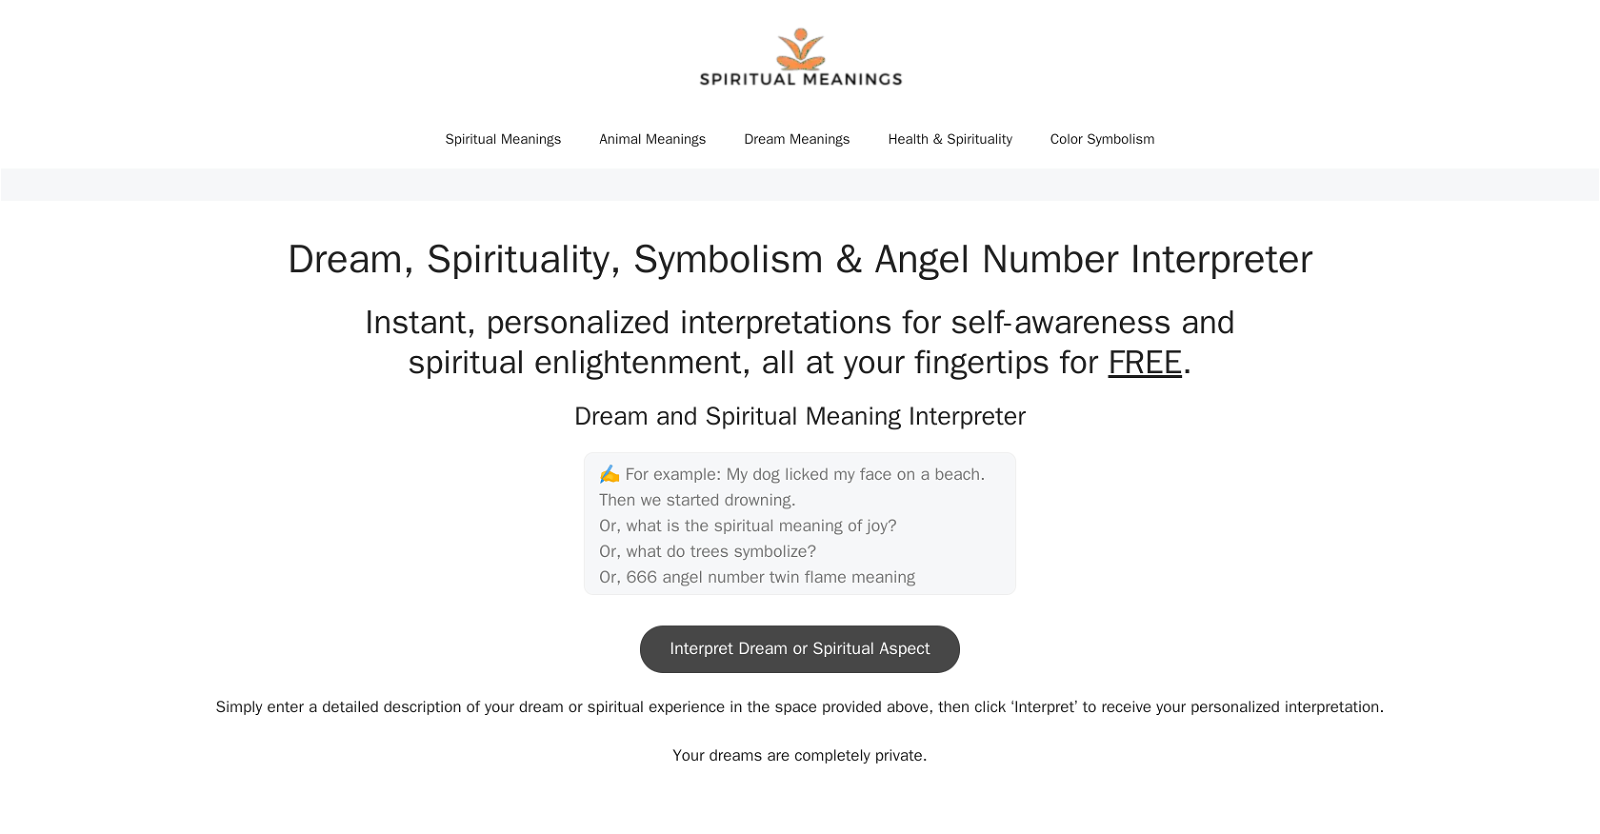 Spiritual Meanings website